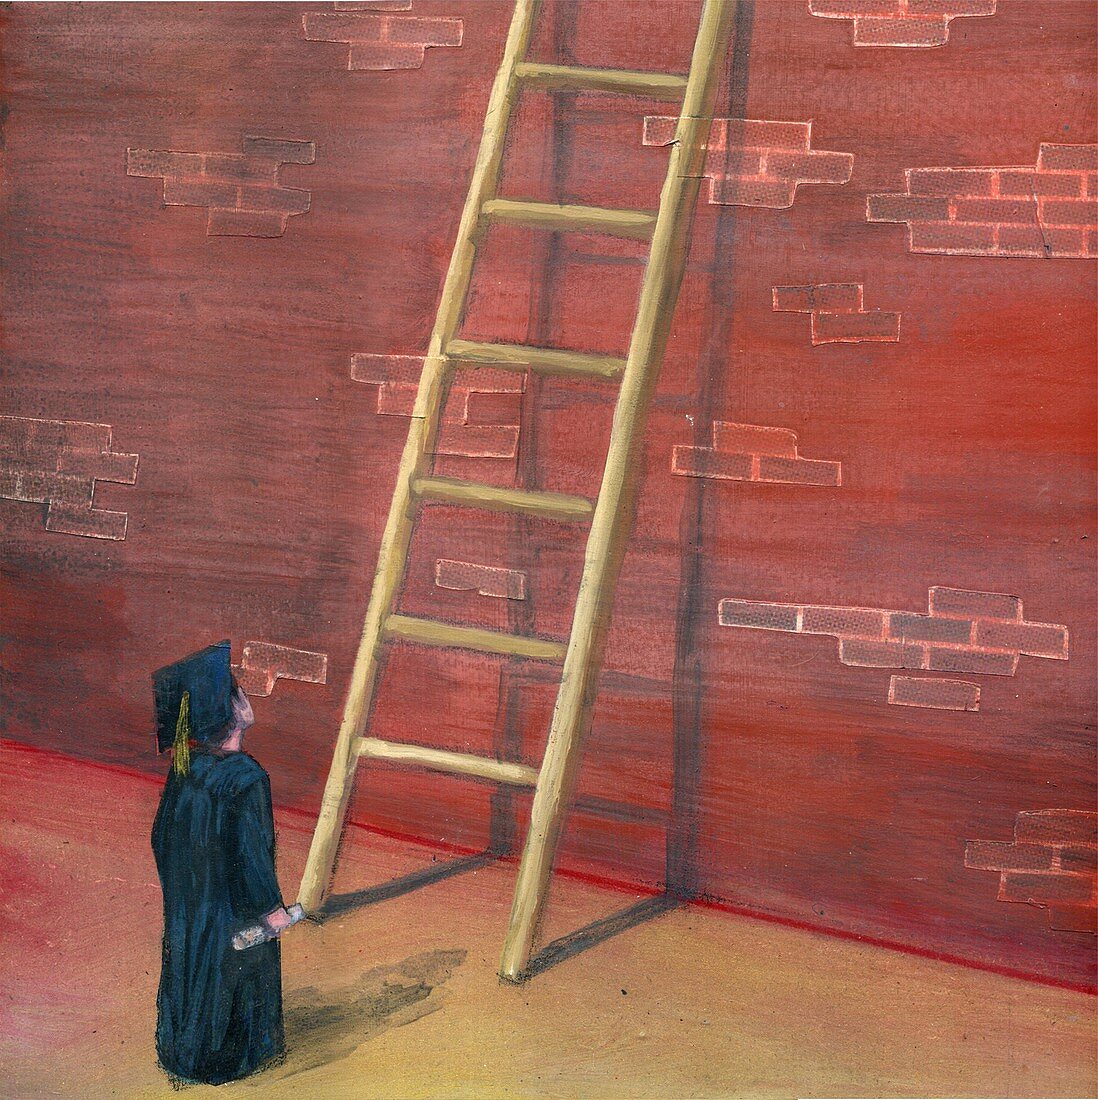 Illustration graduate and ladder